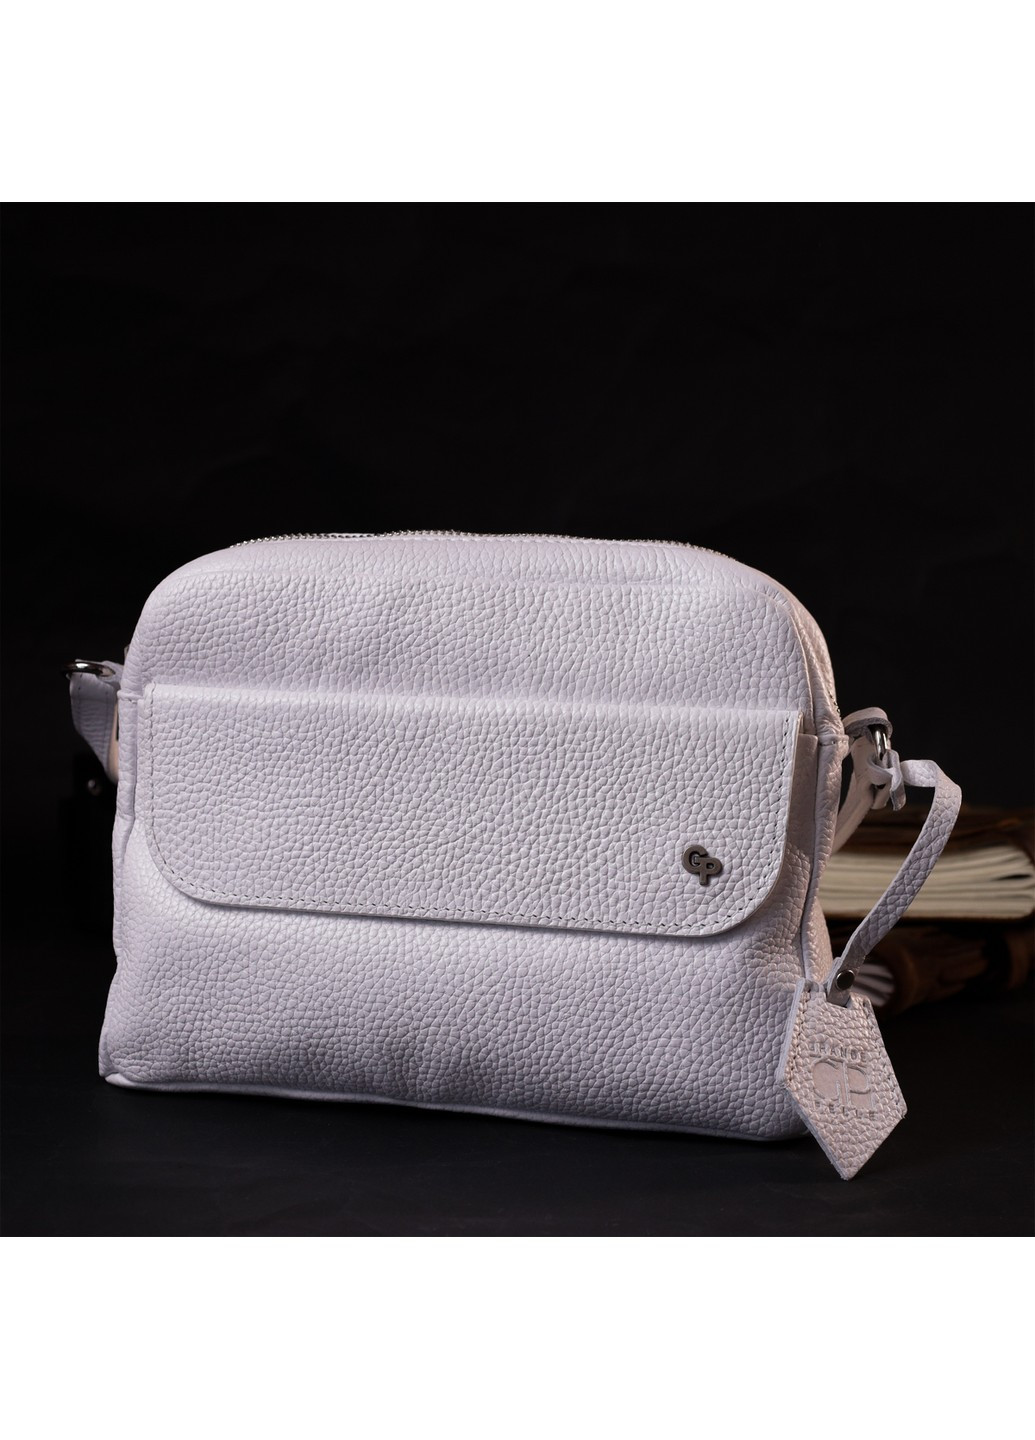 Жіноча сумка крос-боді із натуральної шкіри 11650 Біла Grande Pelle (267507162)